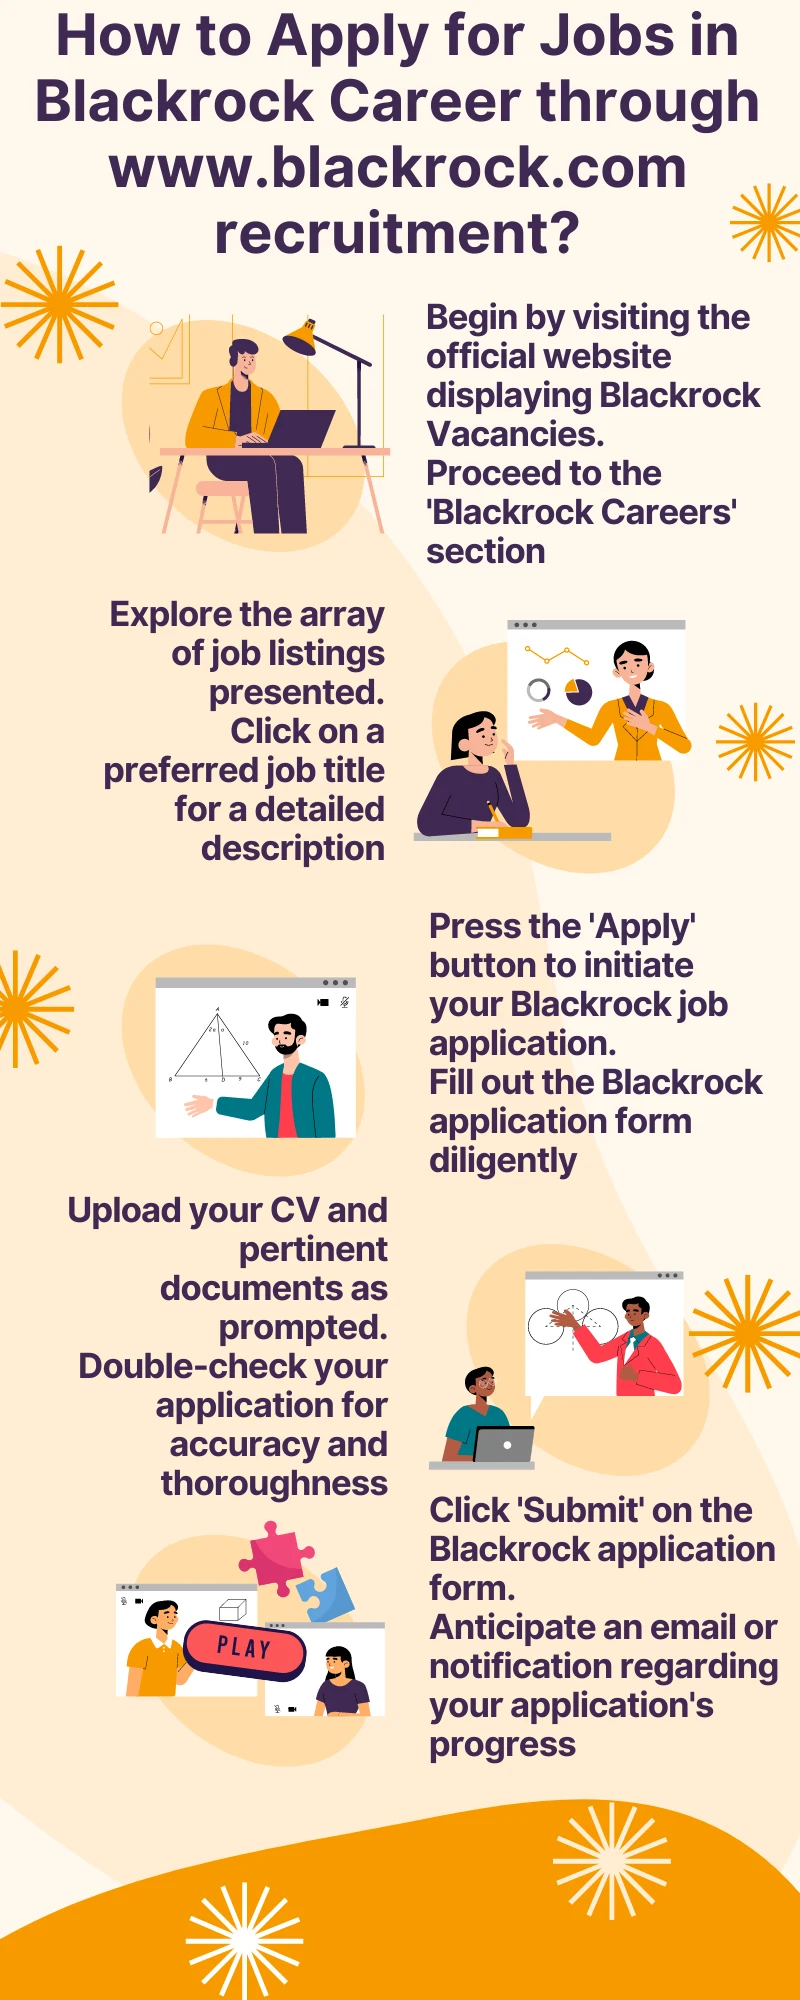 How to Apply for Jobs in Blackrock Career through www.blackrock.com recruitment?